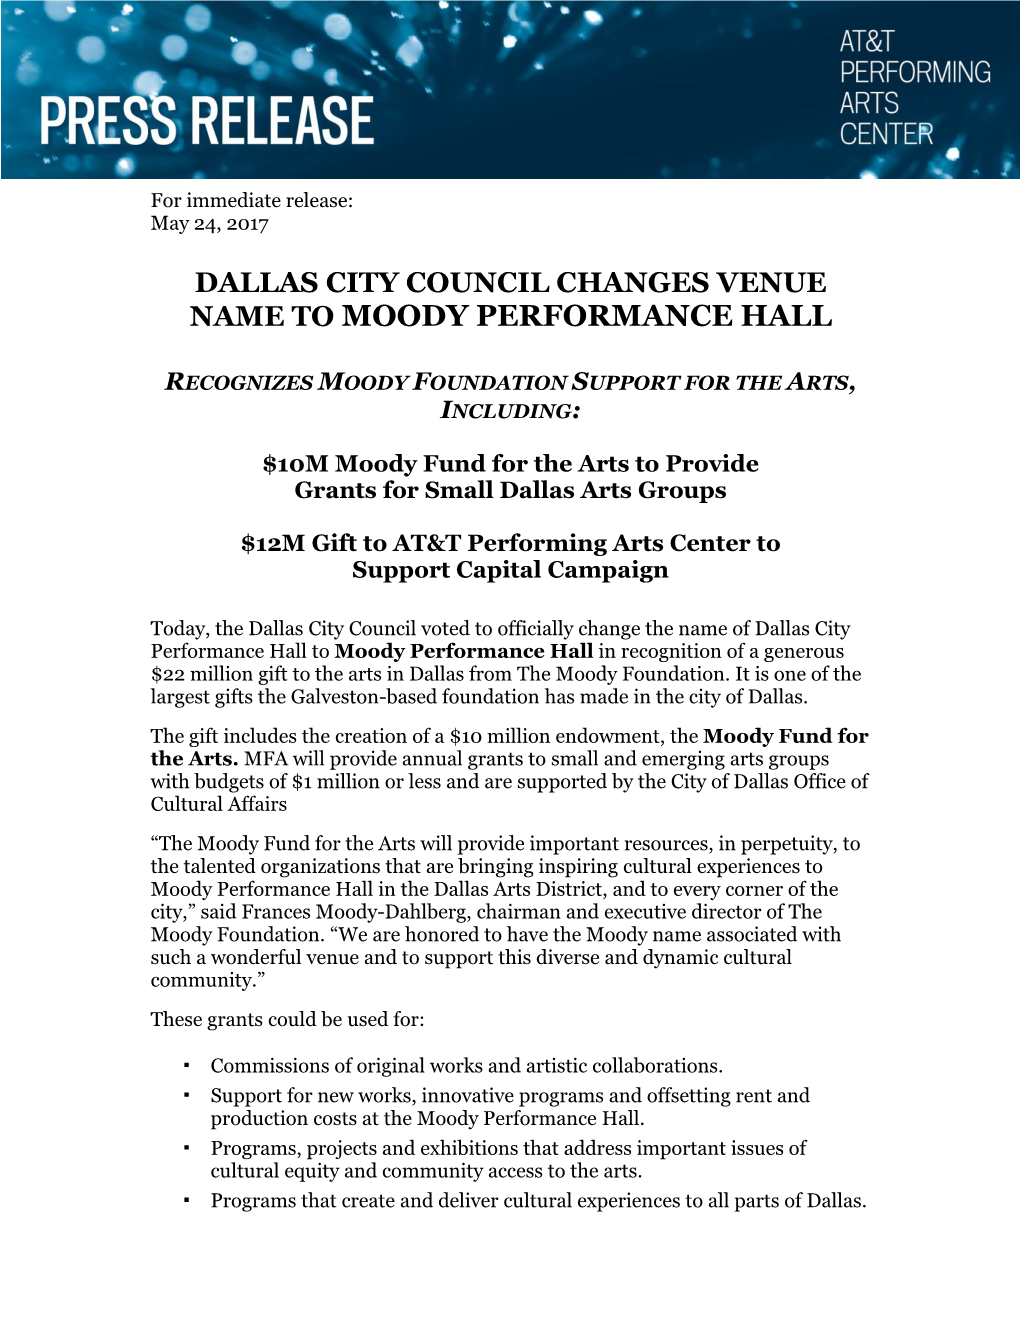 Name to Moody Performance Hall